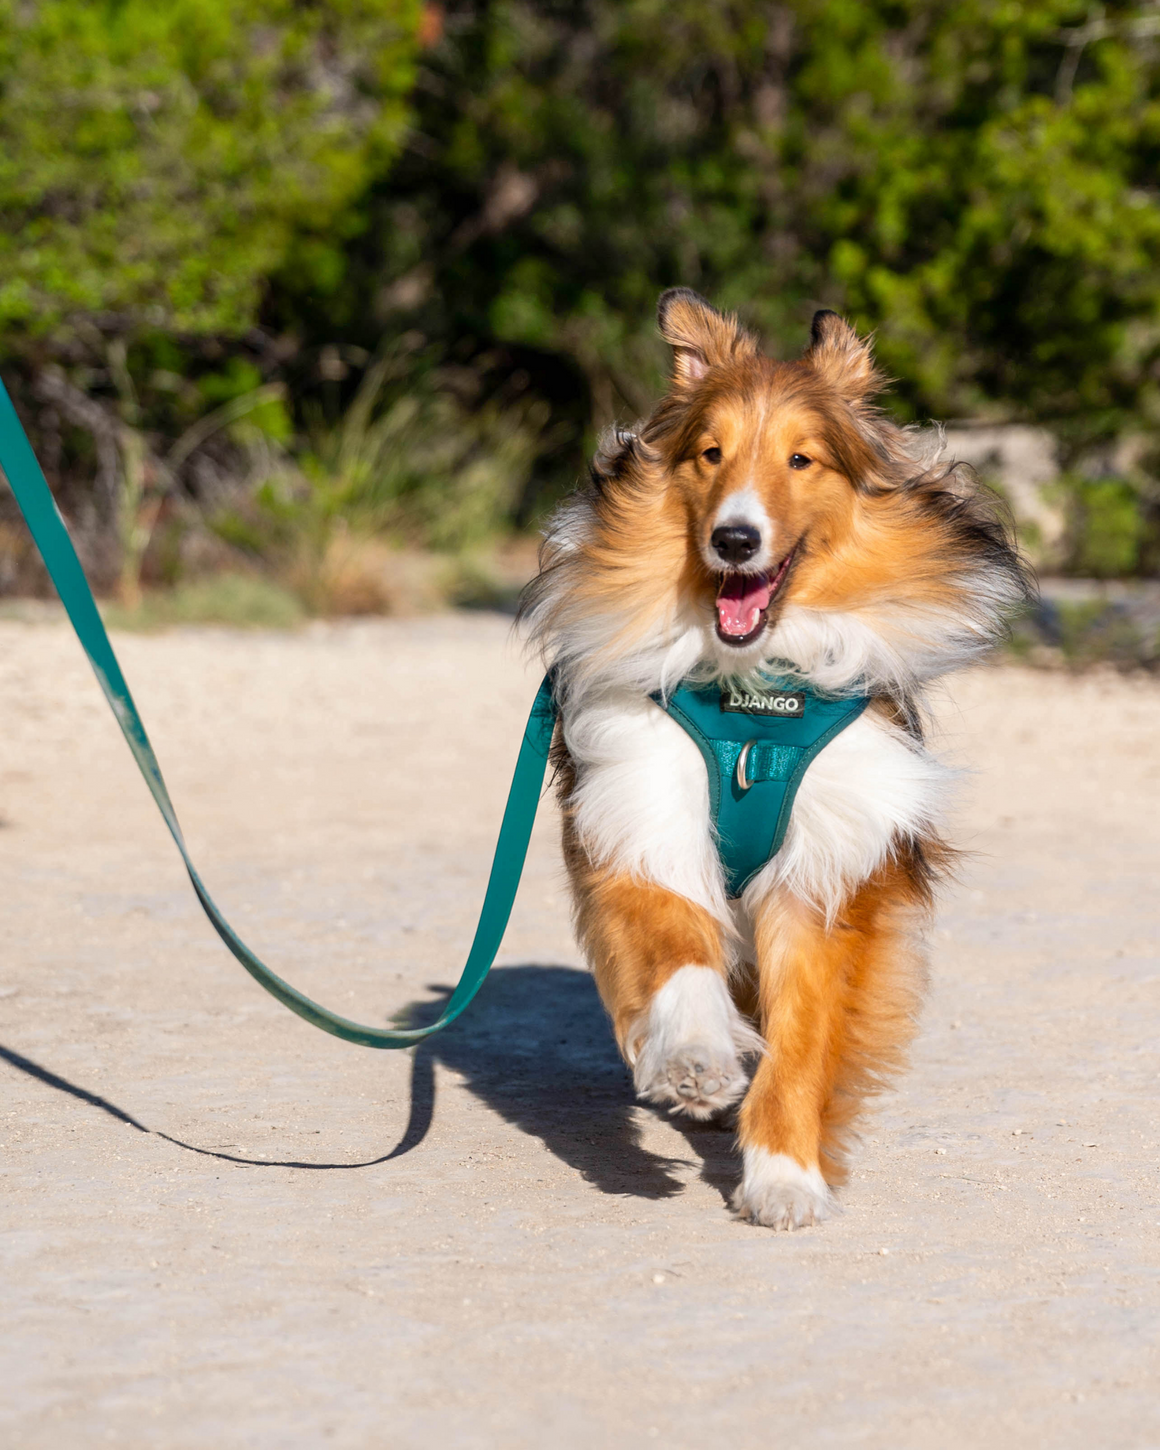 DJANGO Tahoe Dog Leash in Dark Teal - Waterproof, dirt-resistant, odor-resistant, and easy-to-clean dog leash designed for muddy mountain trails, sparkling lakes, and dusty sidewalks. - djangobrand.com